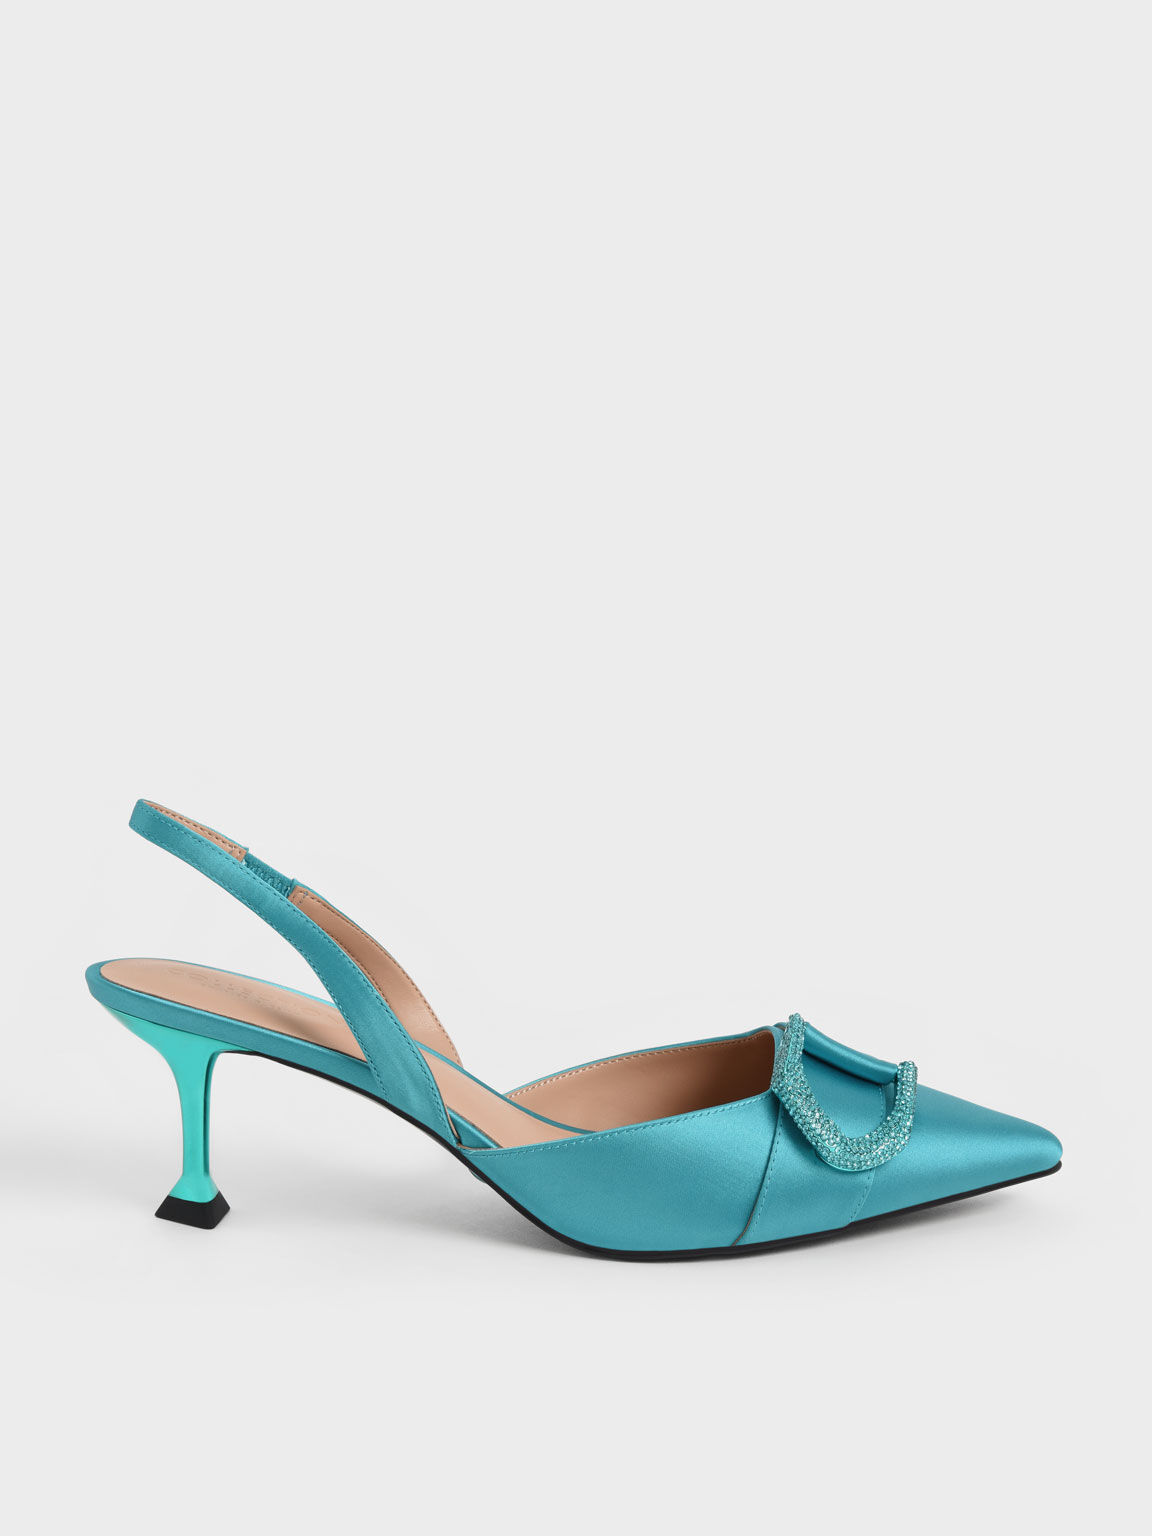 Zara Woman Slingback Pumps turquoise elegant Shoes Pumps Slingback Pumps 